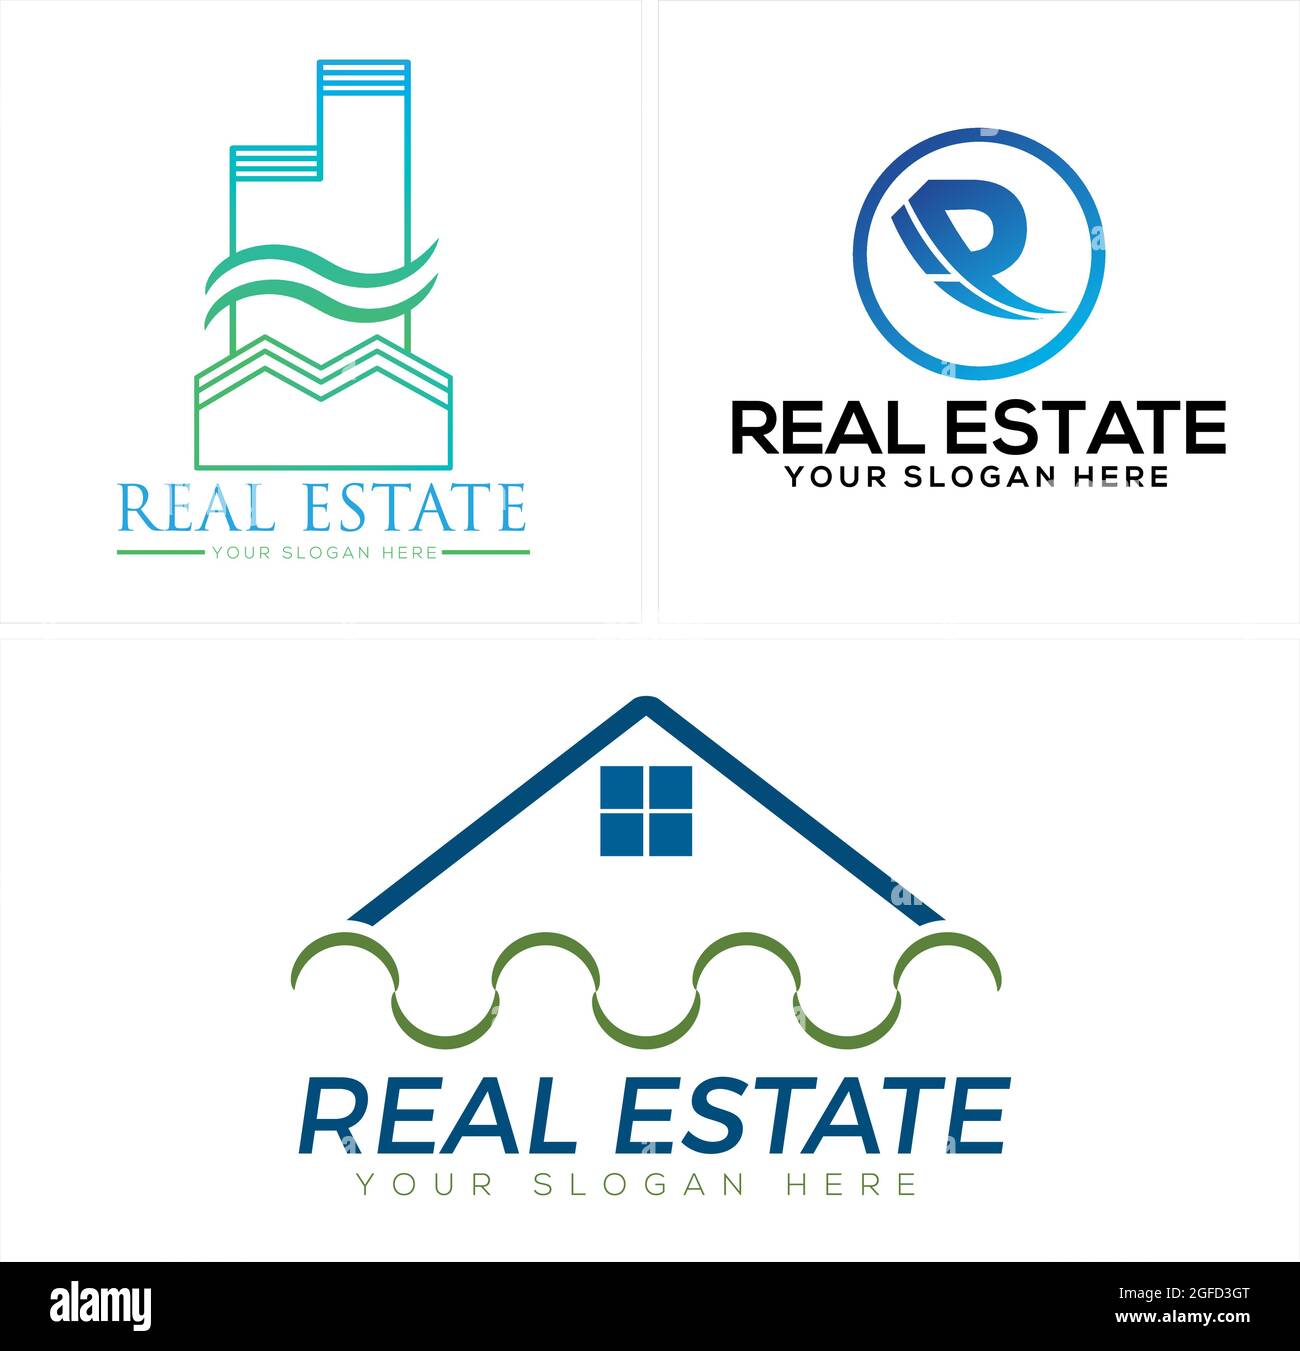 Real estate mortgage building logo design Stock Vector